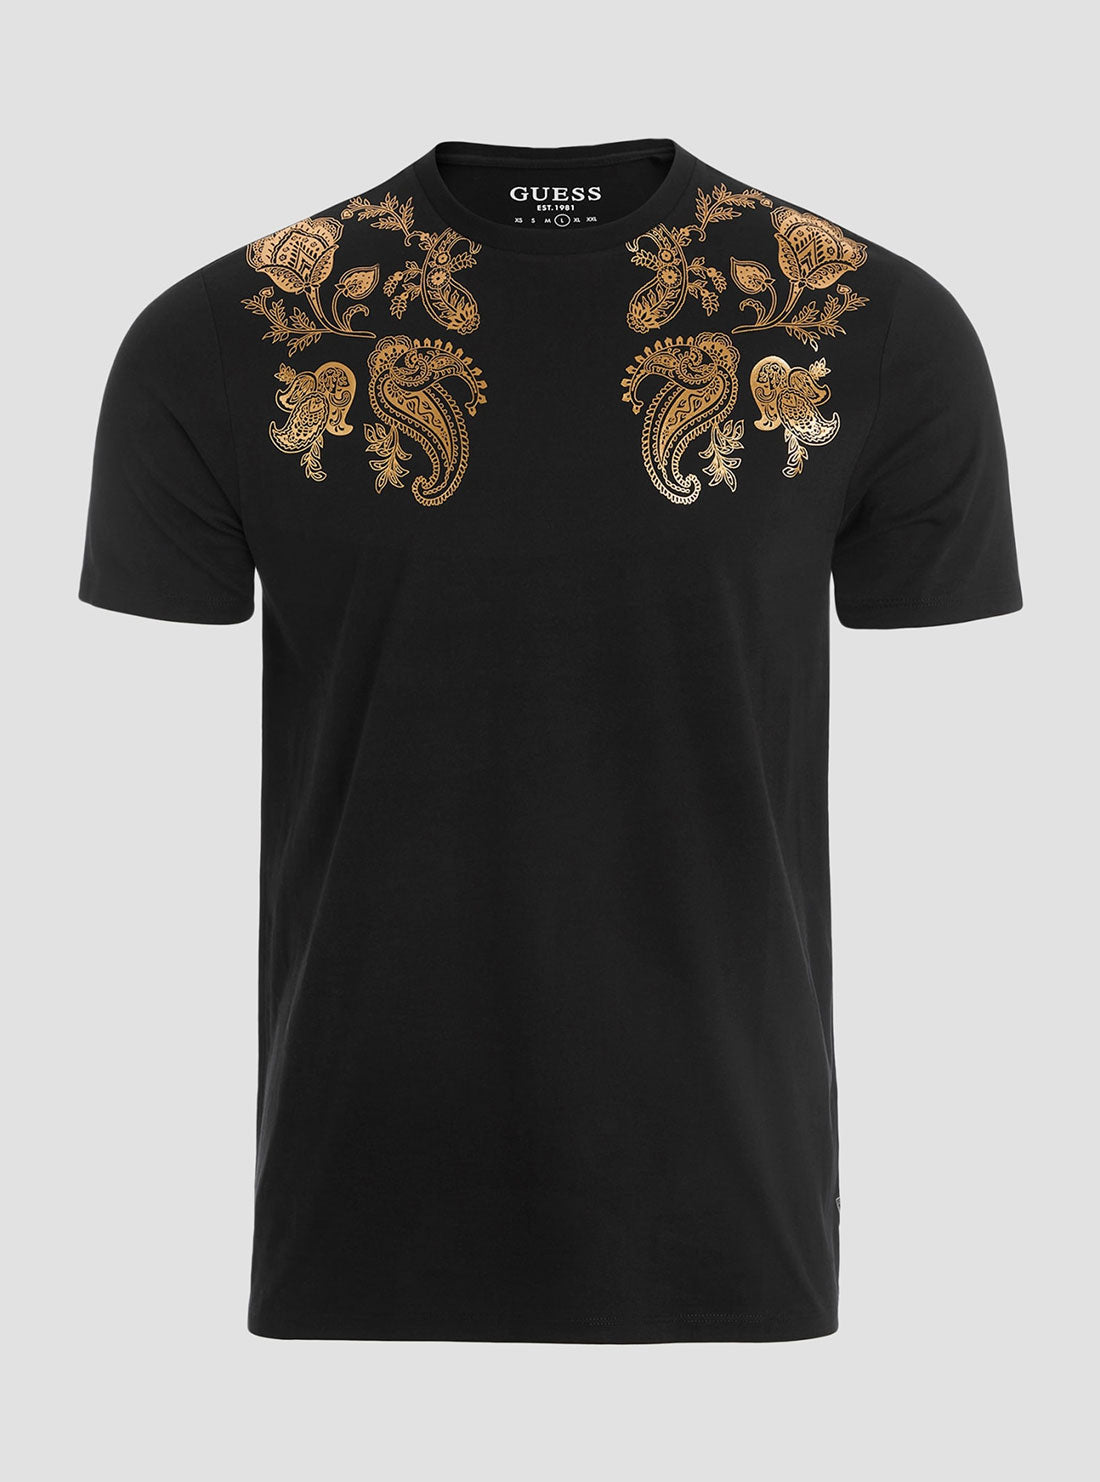 GUESS Men's Eco Black Gold Paisley T-Shirt M3RI73KBDK4 Ghost View